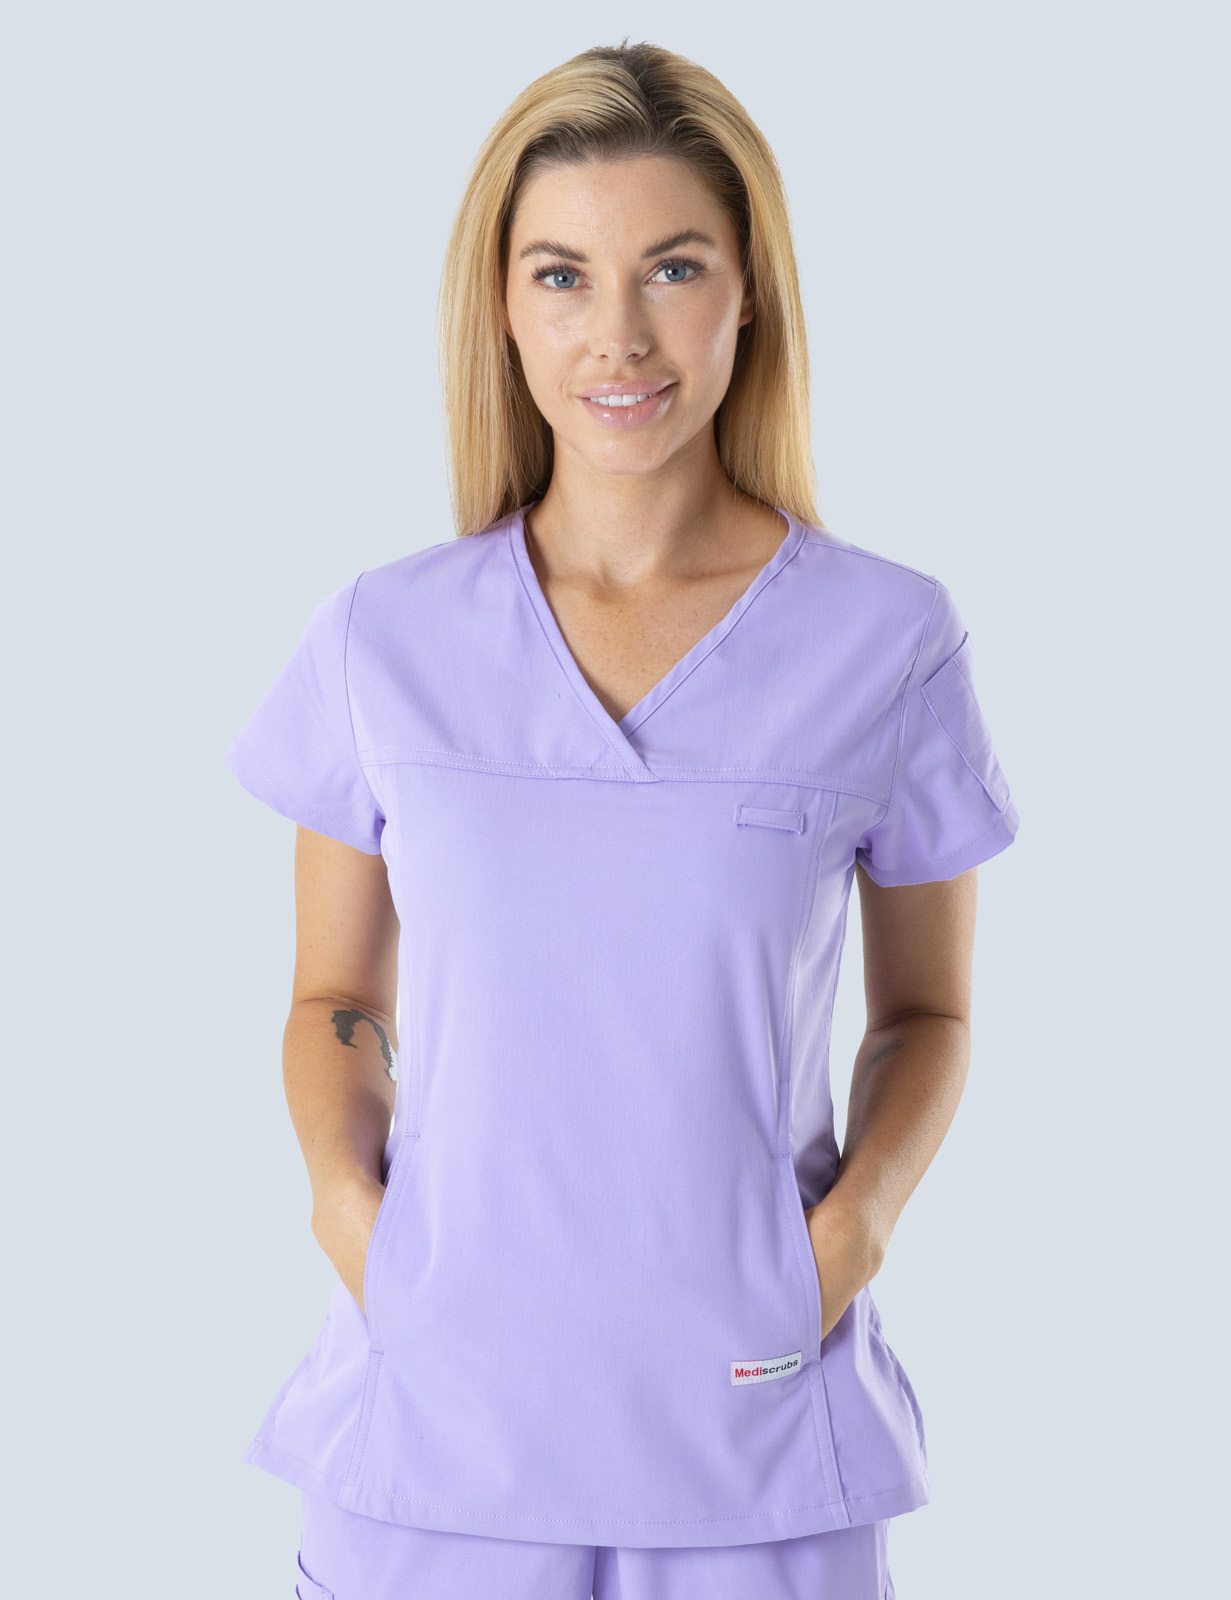 Queensland Children's Hospital Emergency Department Assistant in Nursing  Uniform Top Bundle  (Women's Fit Top in Lilac incl Logos)